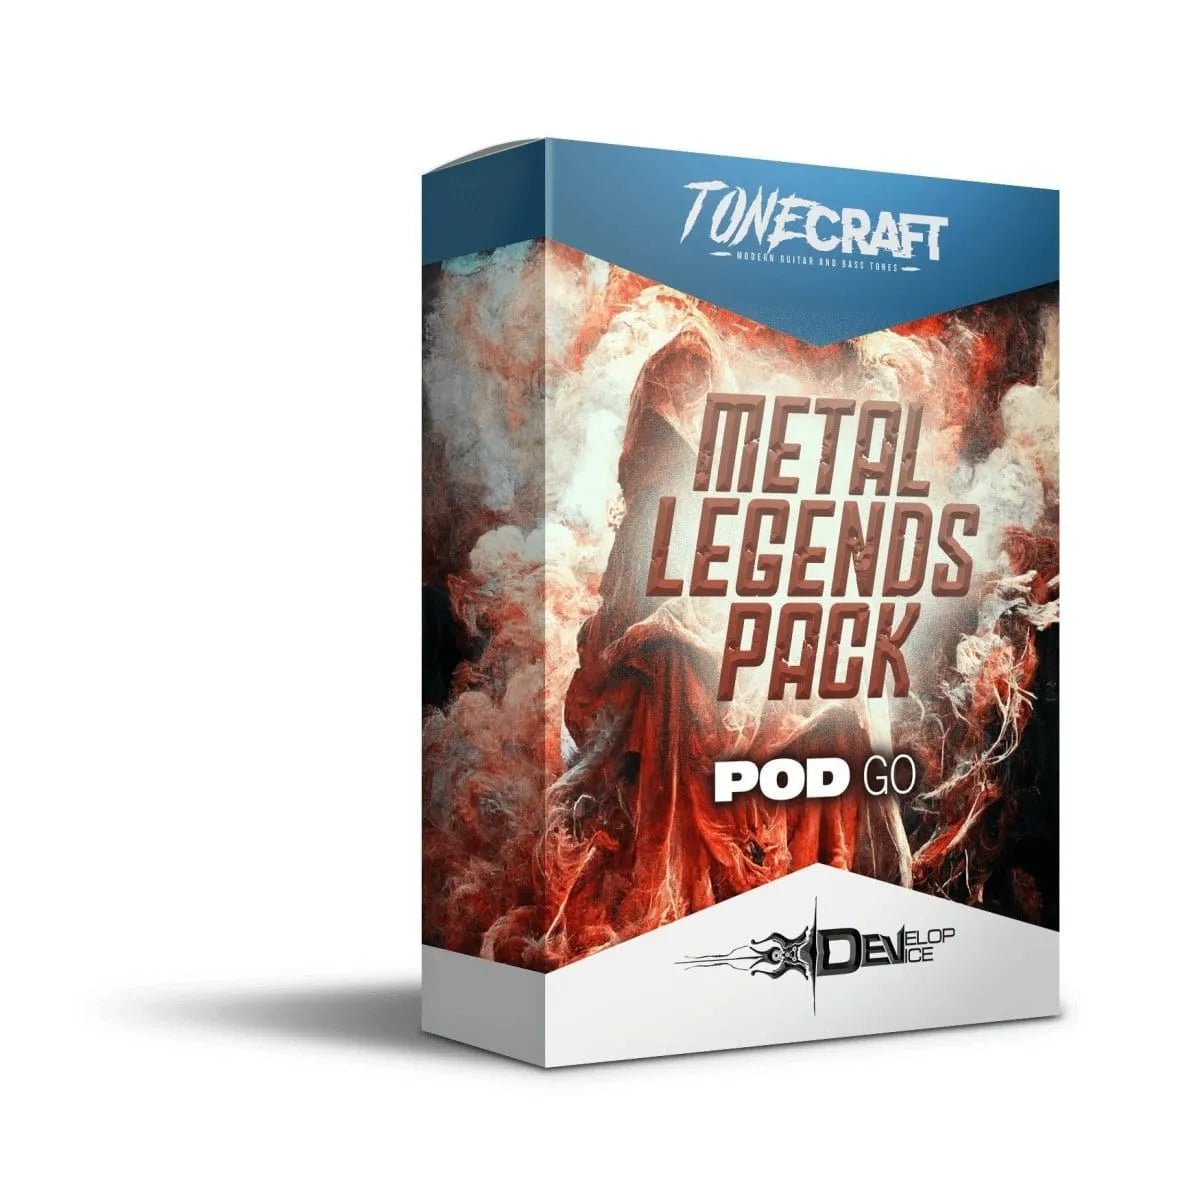 Metal Legends Pack for Line 6 POD Go - Line 6 POD Go Presets by Develop Device